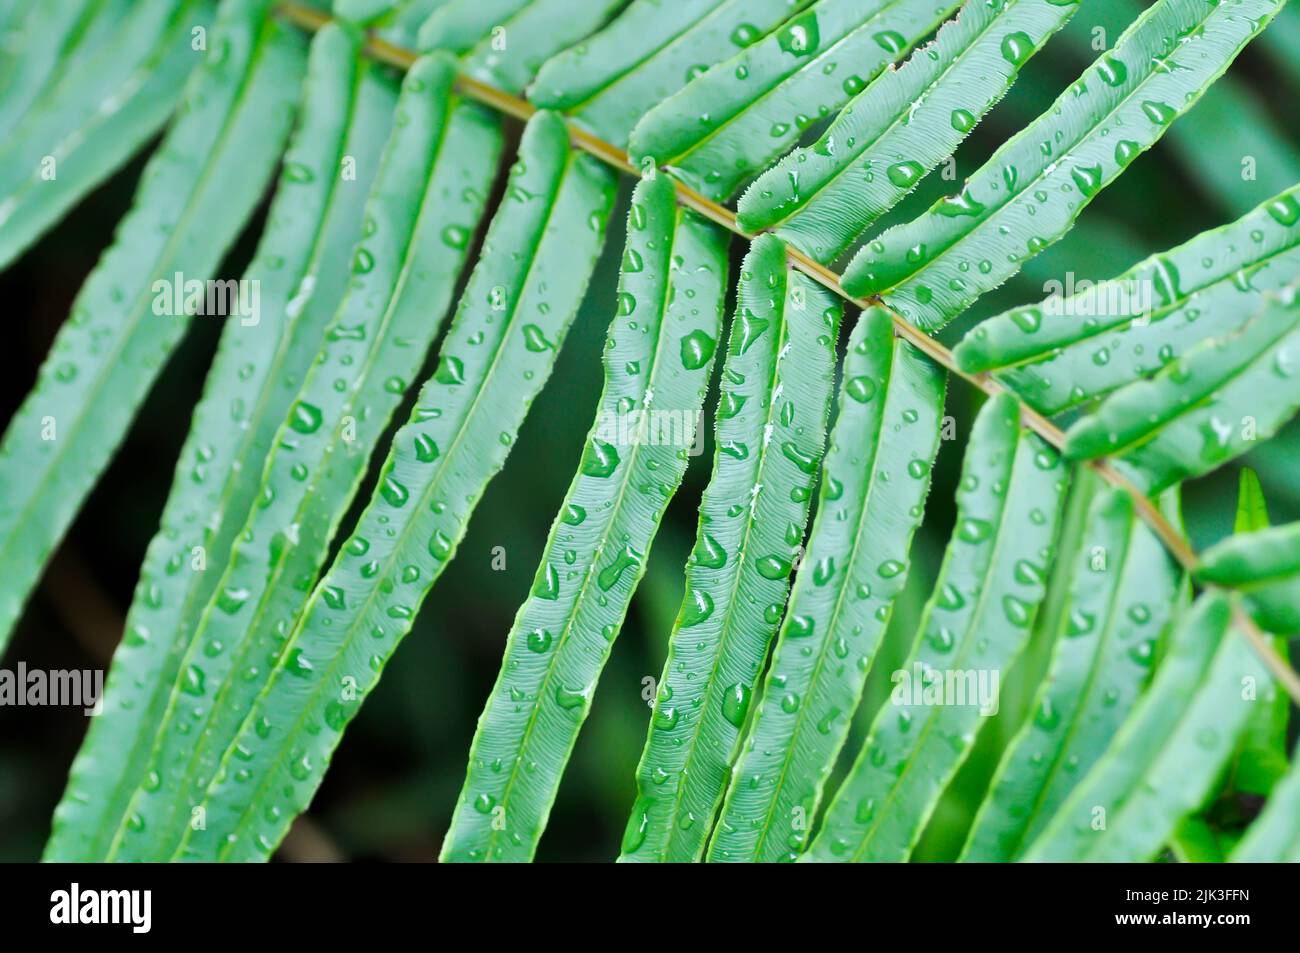 Pteris vittataPteris vittata or Pteris vittata L or fern , fern plant and rain drop on the leaf Stock Photo